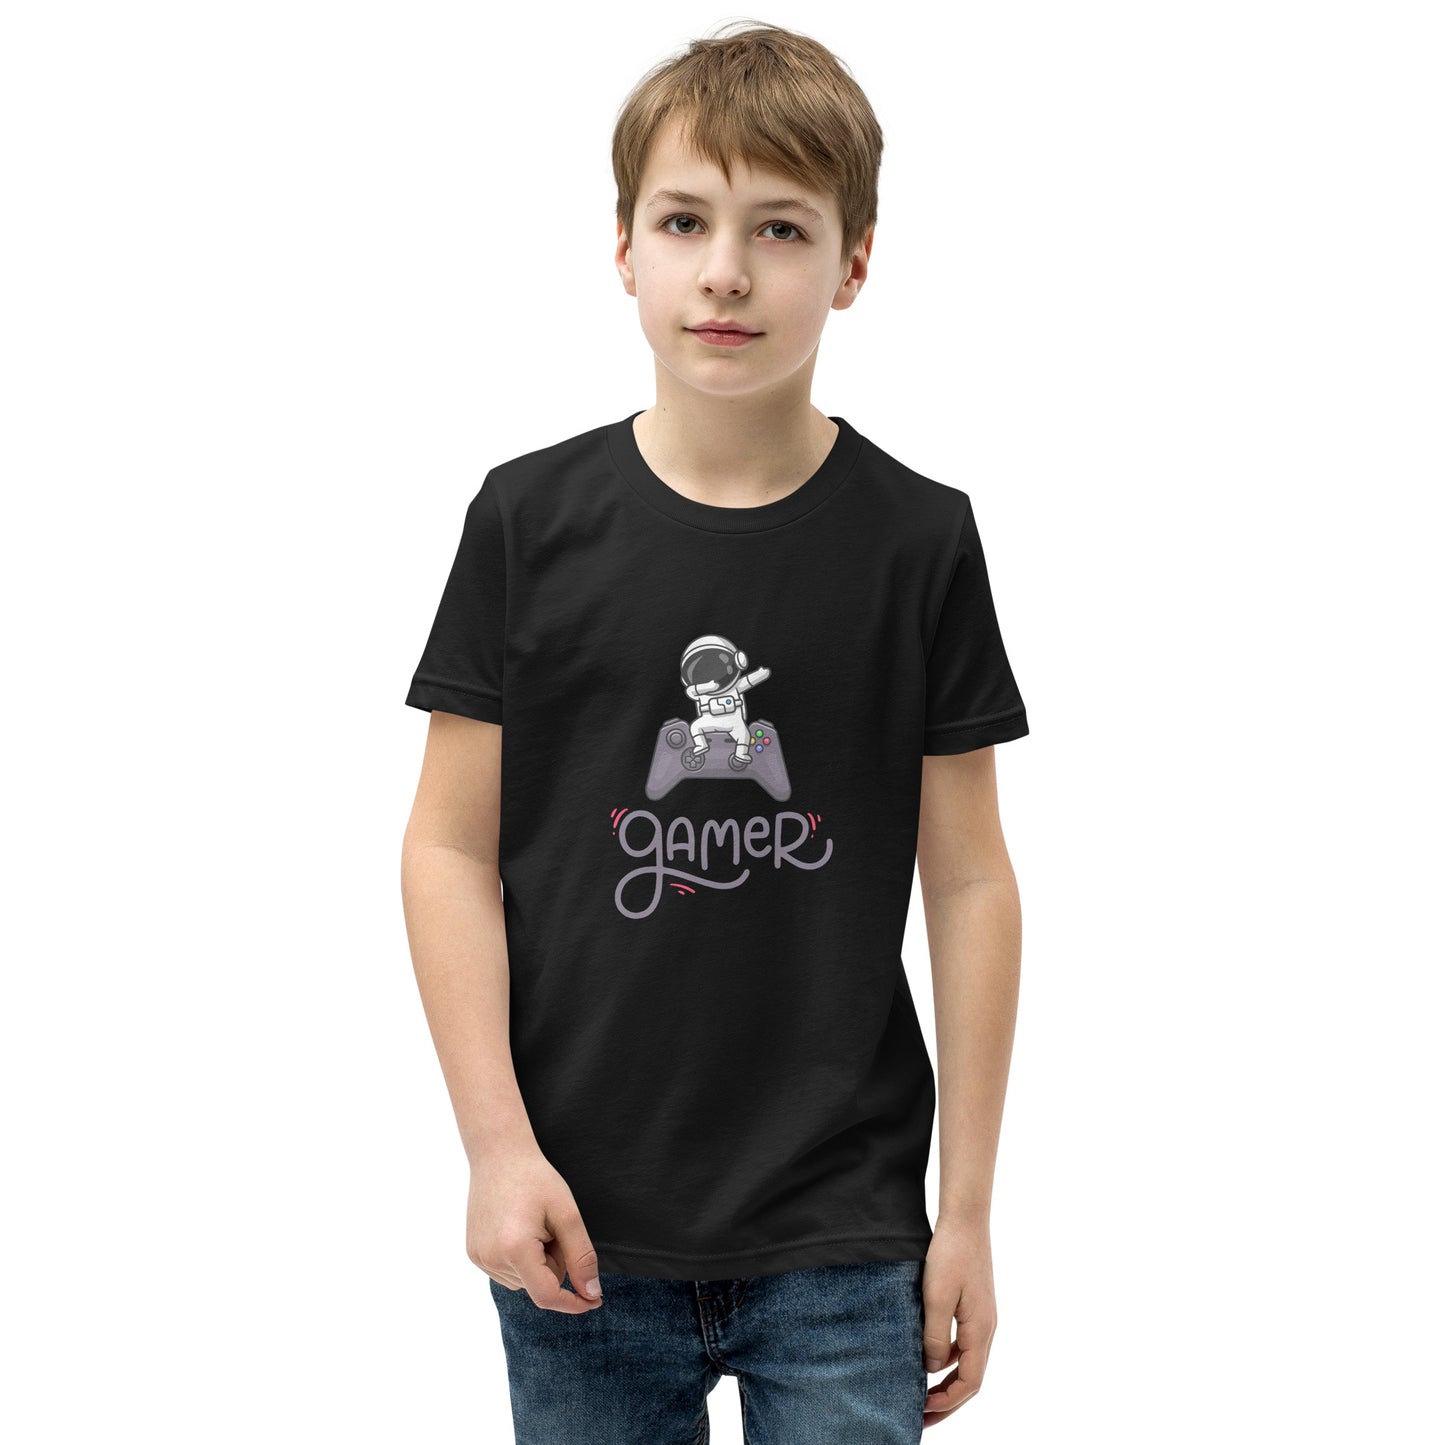 Gamer - Youth Short Sleeve T-Shirt - HobbyMeFree